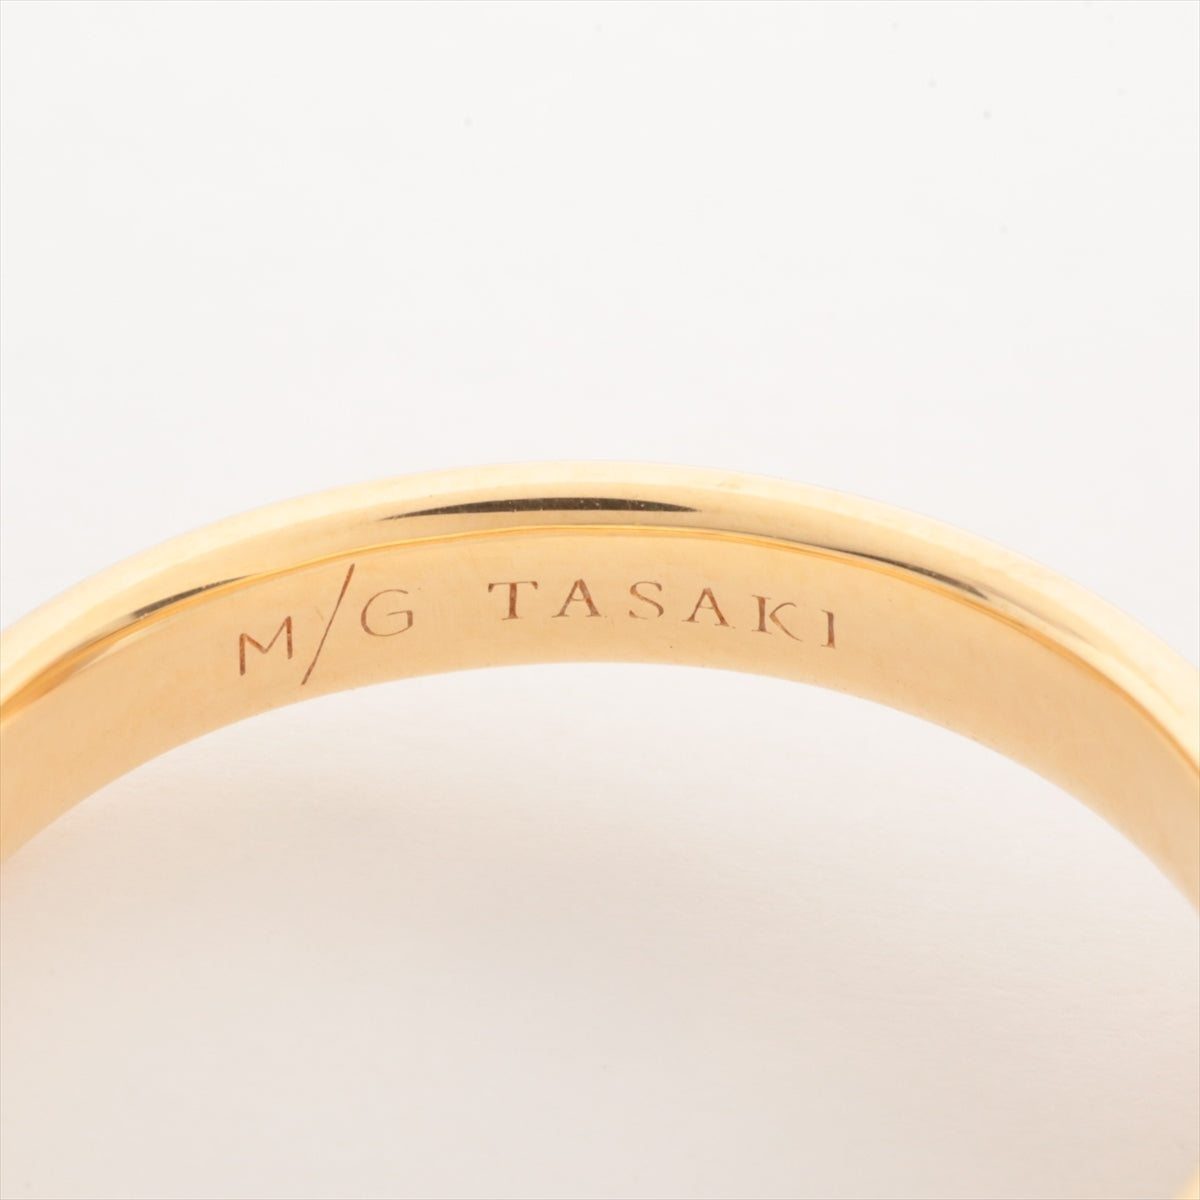 TASAKI M/G Arlequin Pearl rings 750(YG) 5.2g pearl thread